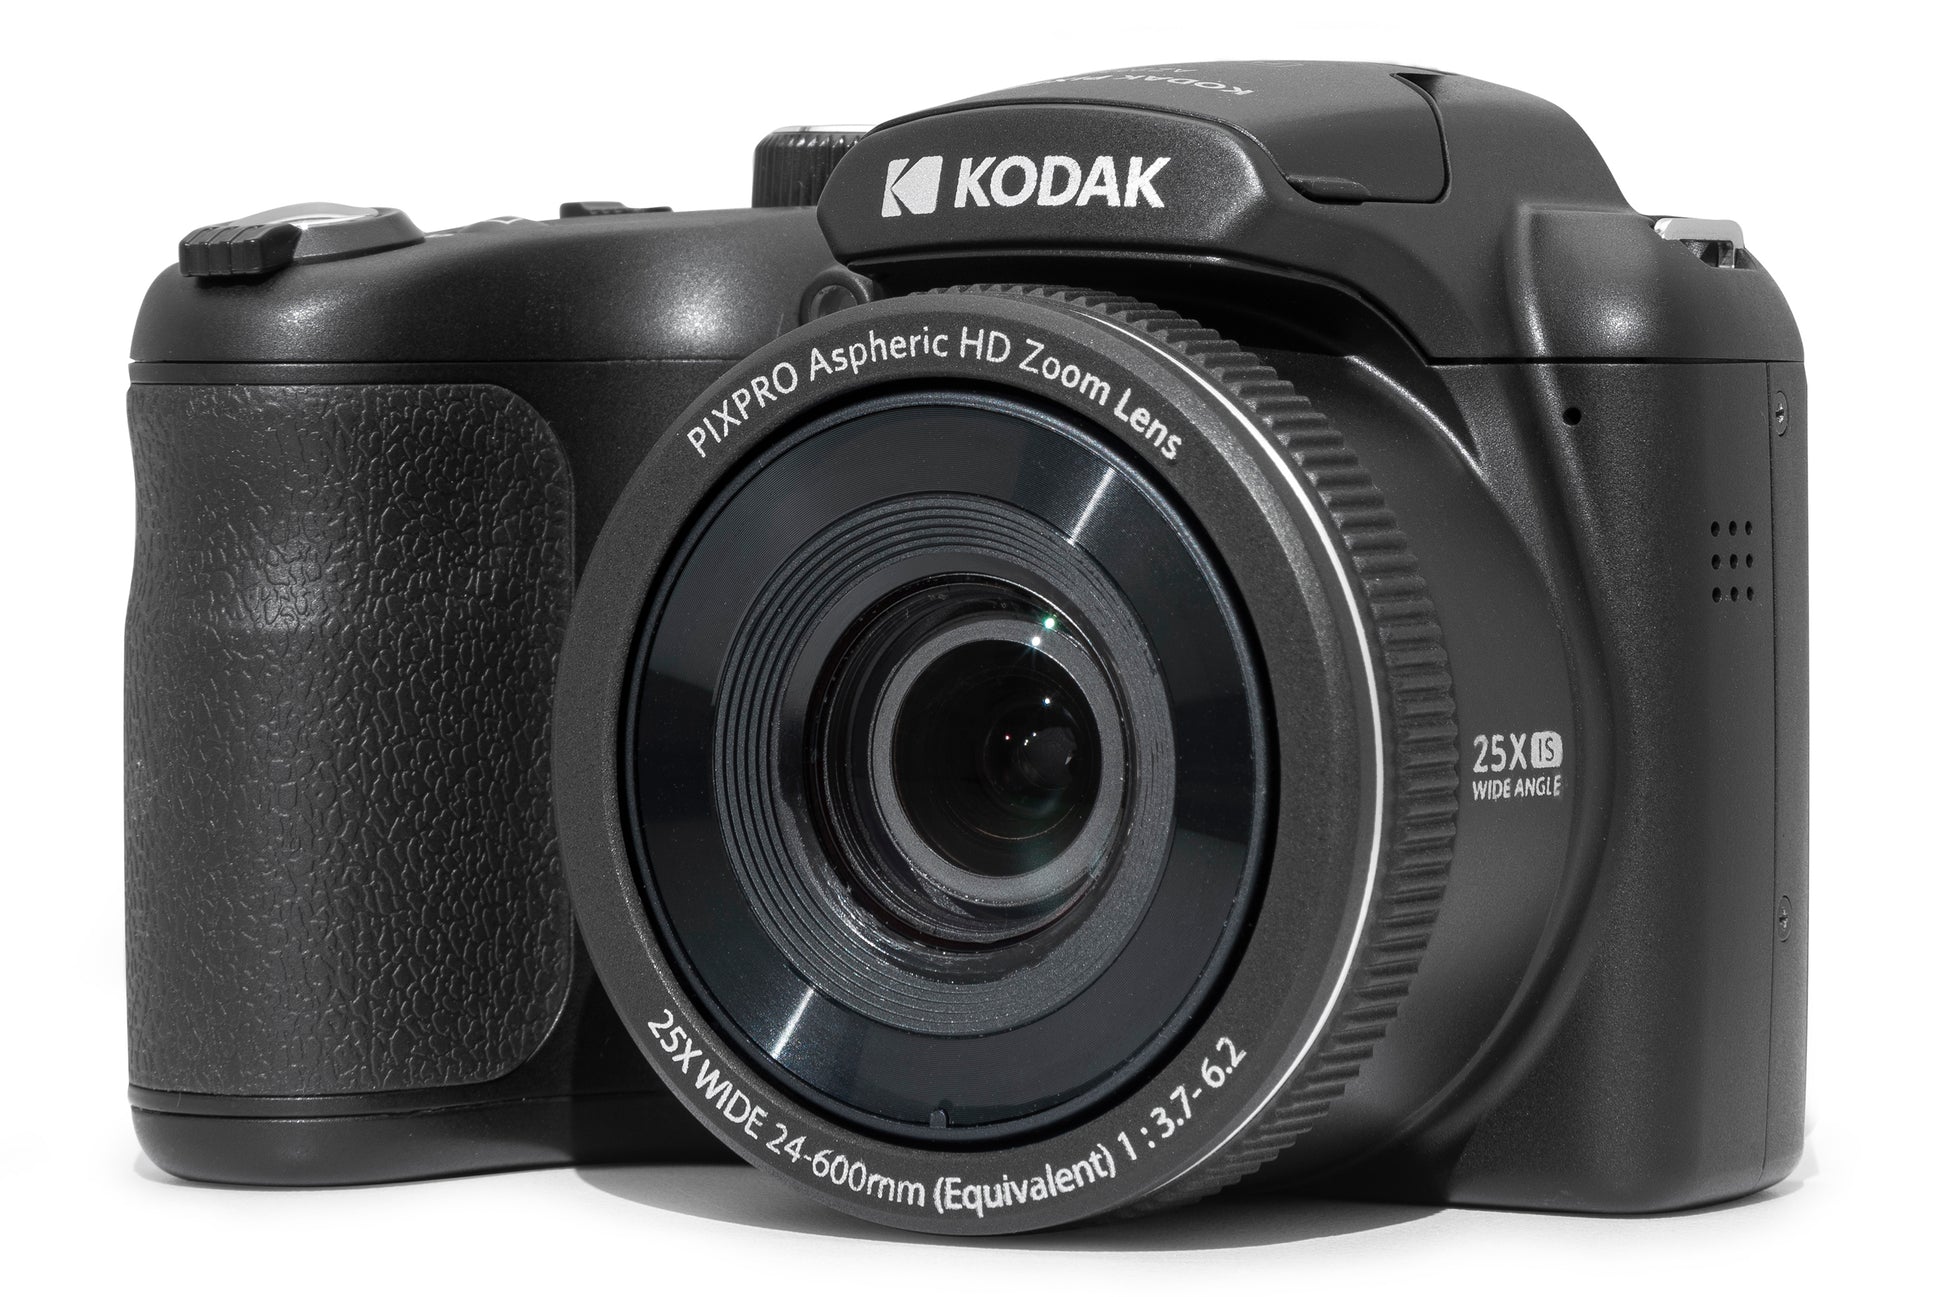 Kodak PIXPRO AZ255 Astro Zoom Bridge Camera with 32GB SD Card and Case - maplin.co.uk